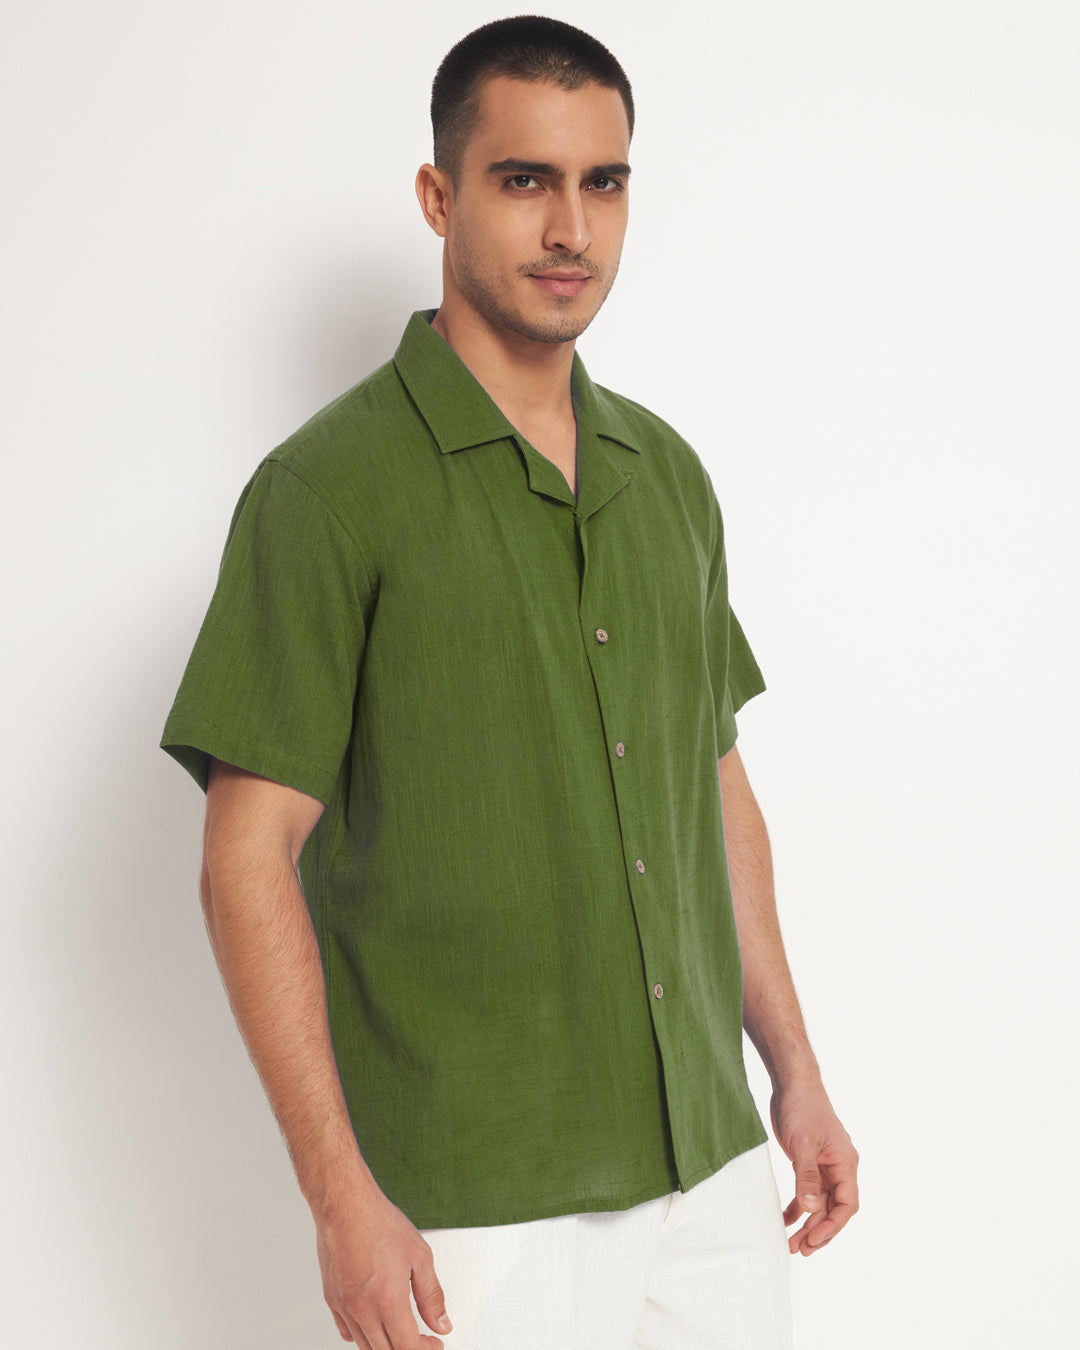 Combo : Classic Spring Green & Black Men's Half Sleeves Shirt